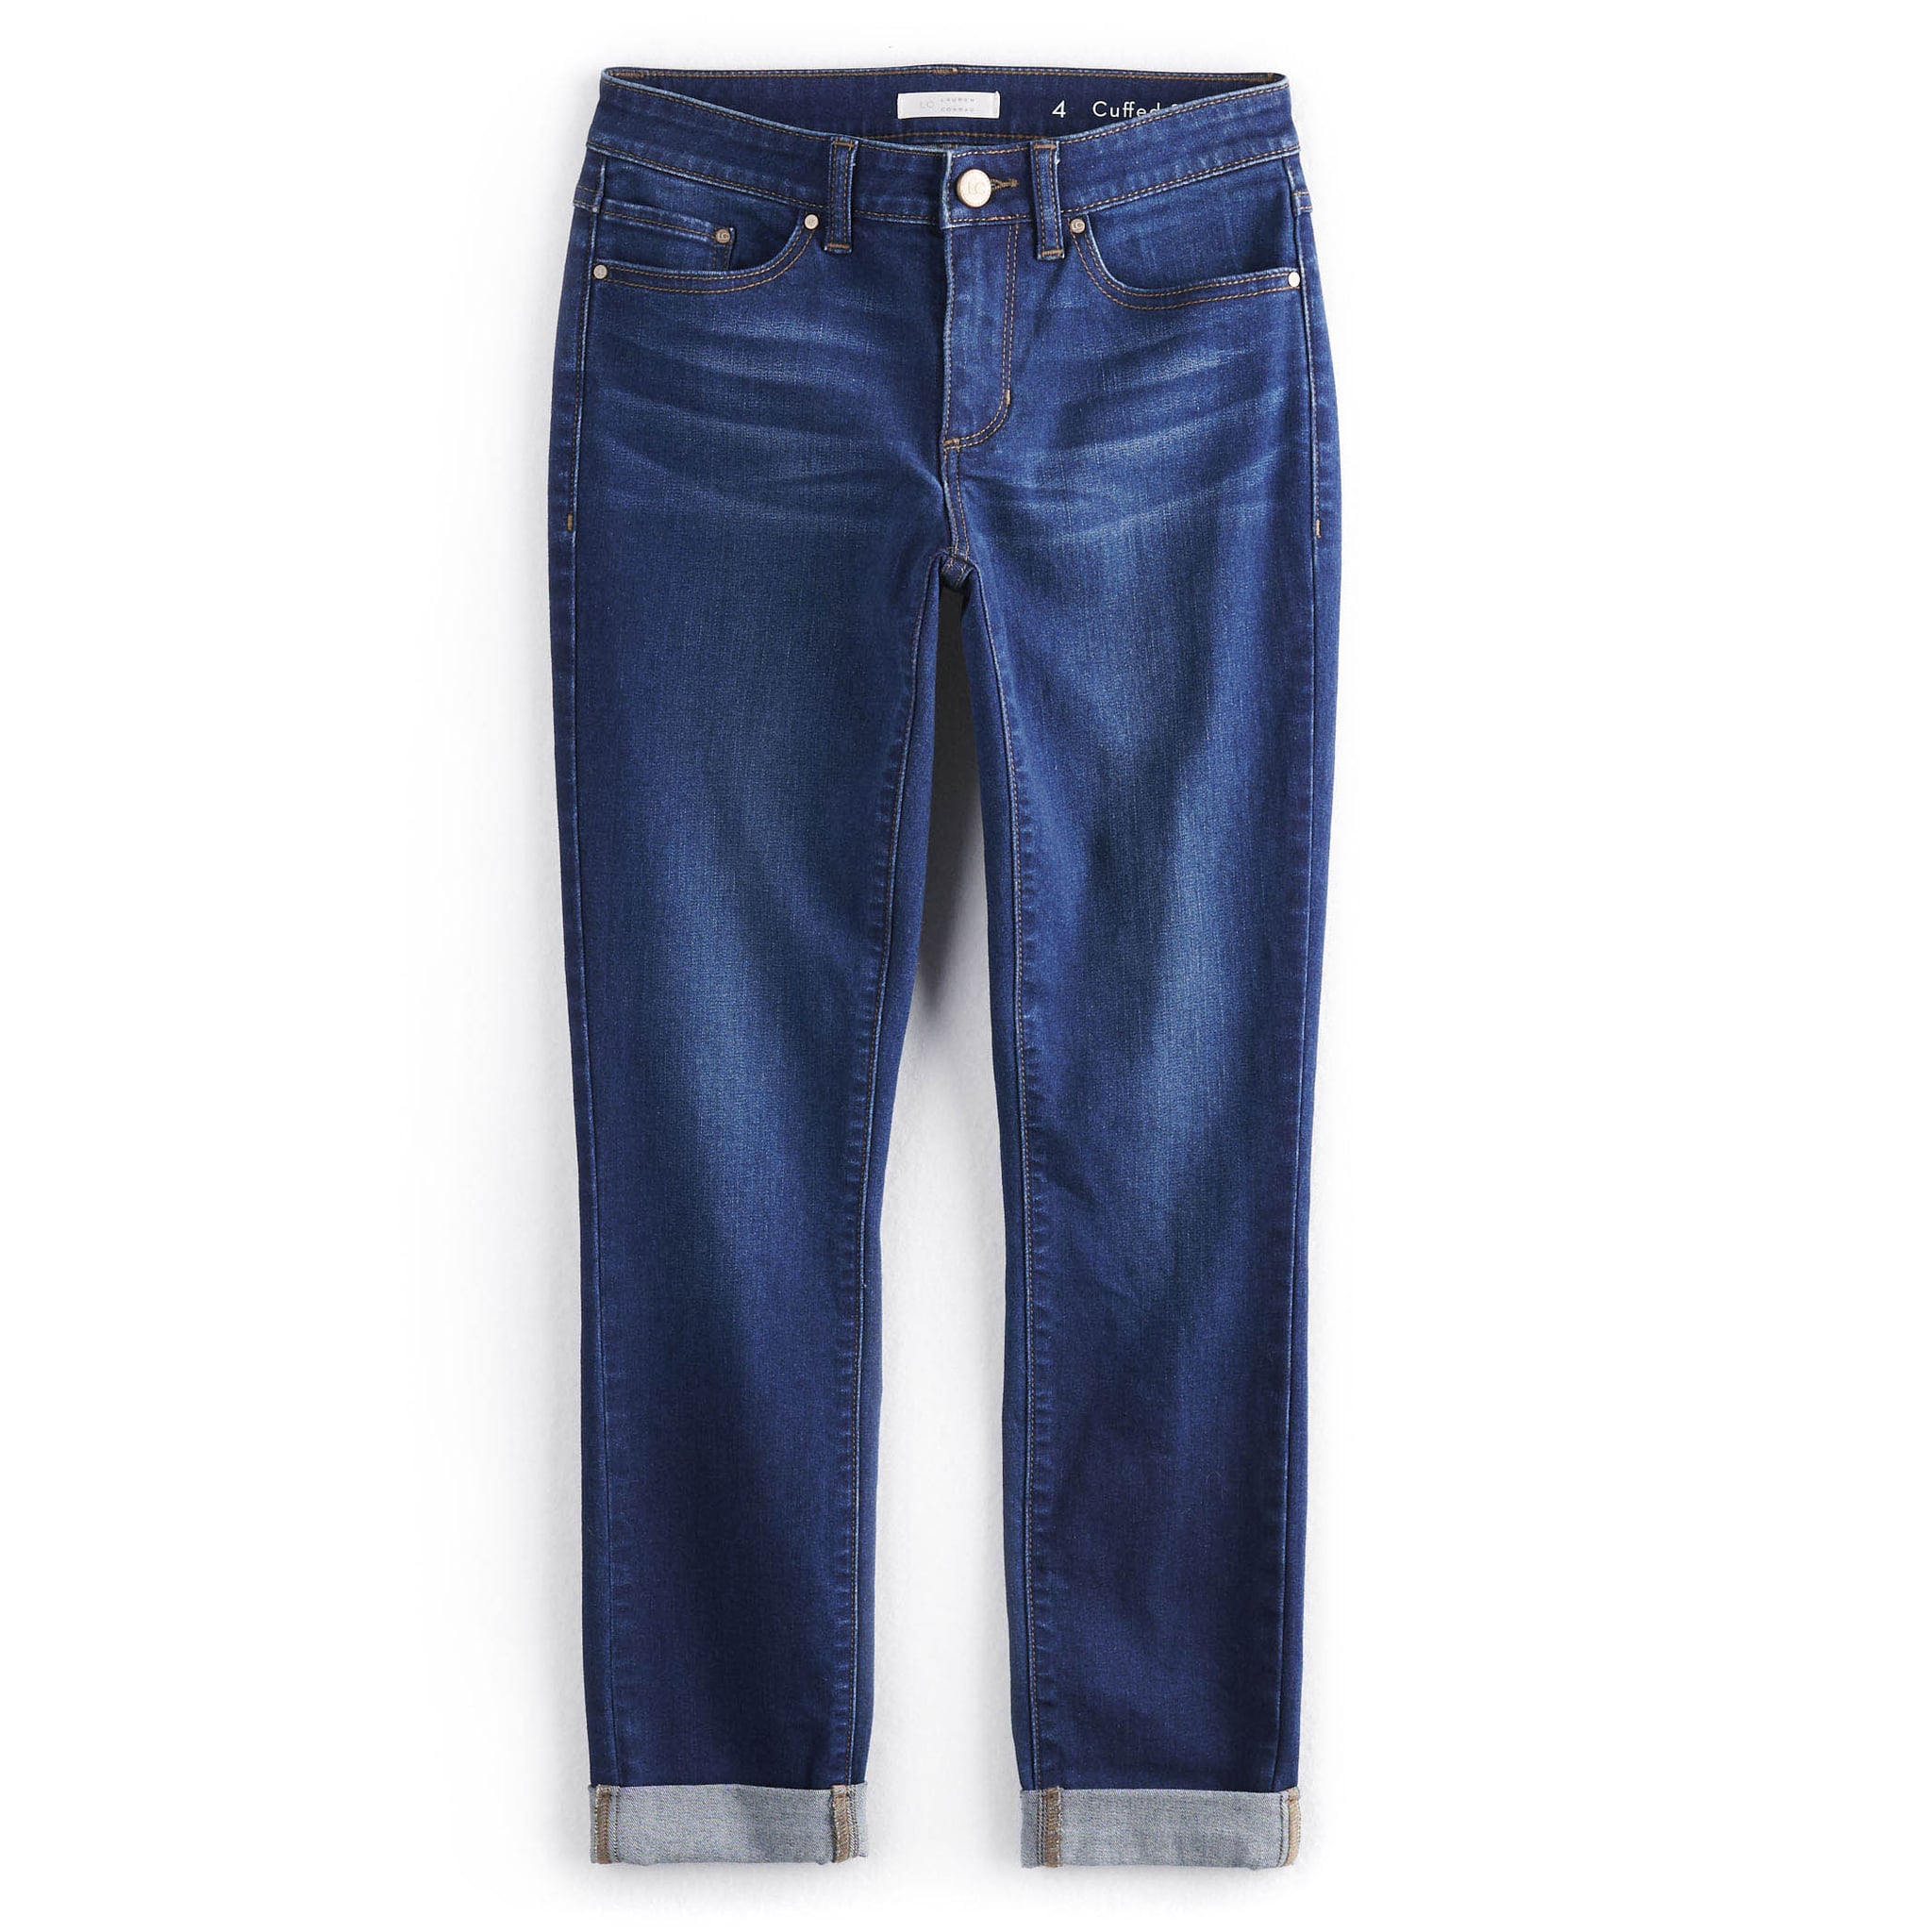 kohl's lauren conrad jeans